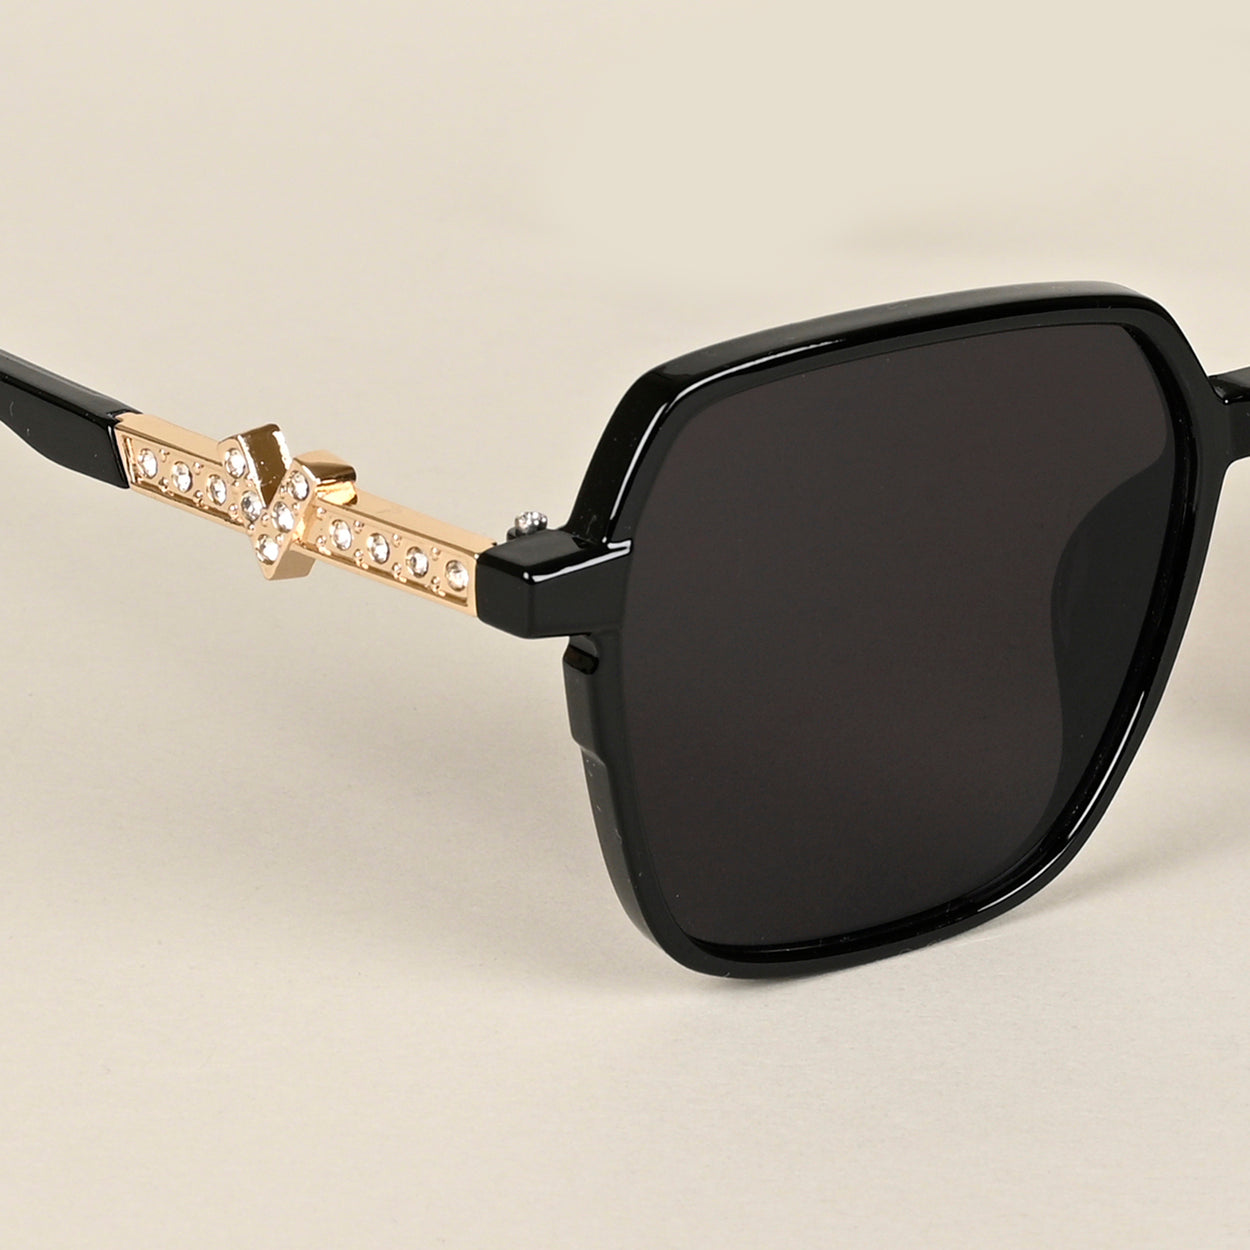 Voyage Black Square Sunglasses for Women - MG4231